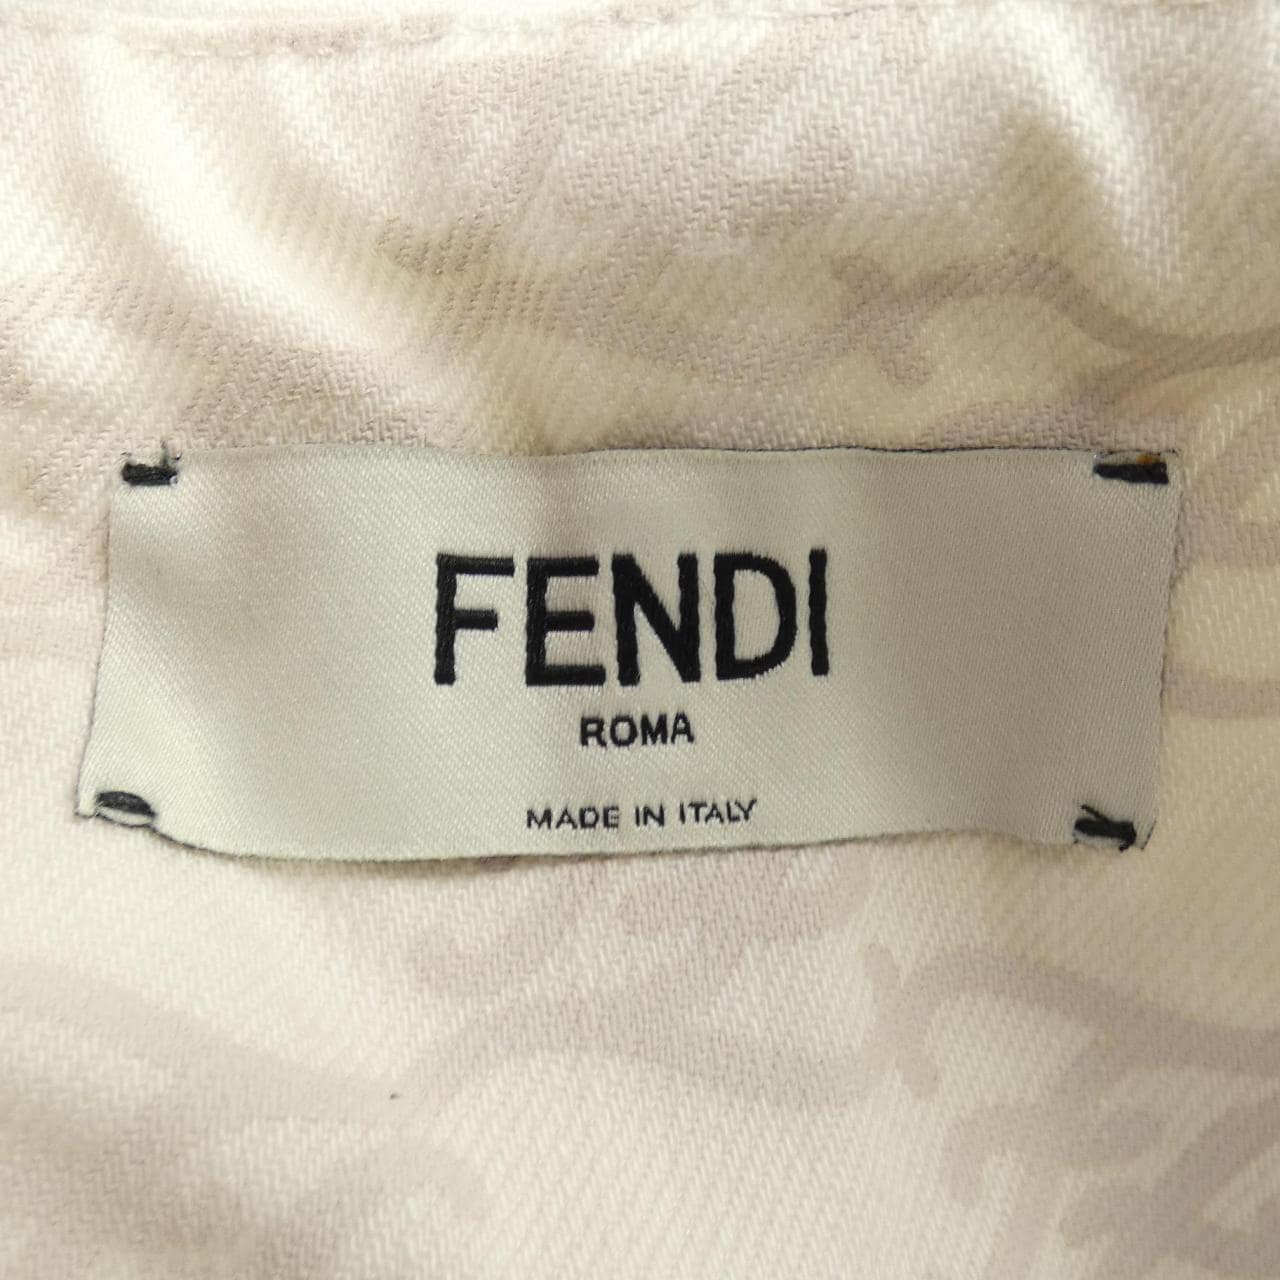 FENDI shorts